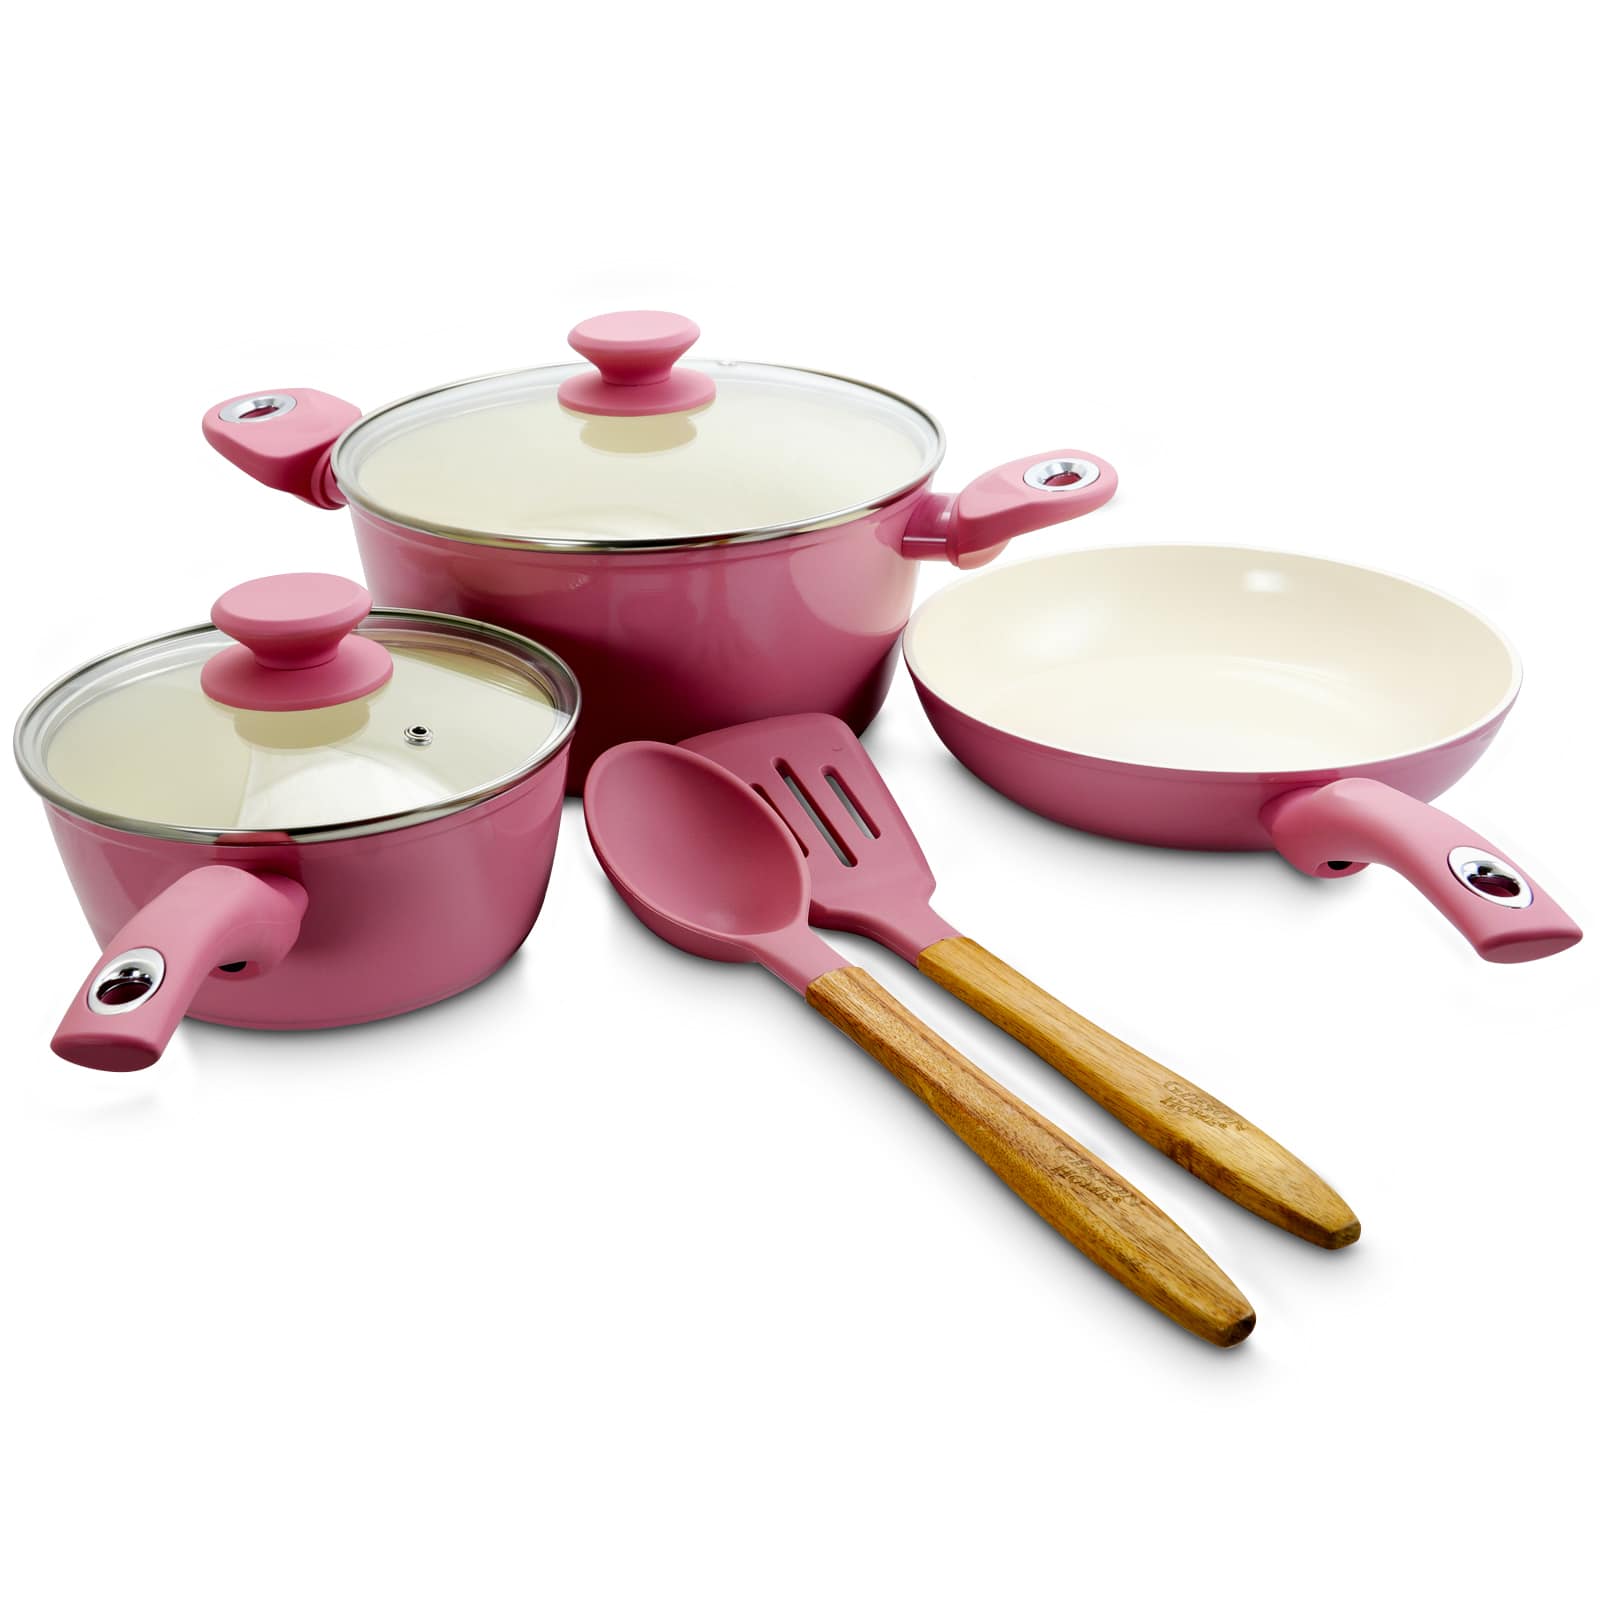 7-Piece High Quality Aluminum Pots and Pans with Lids Cookware Set